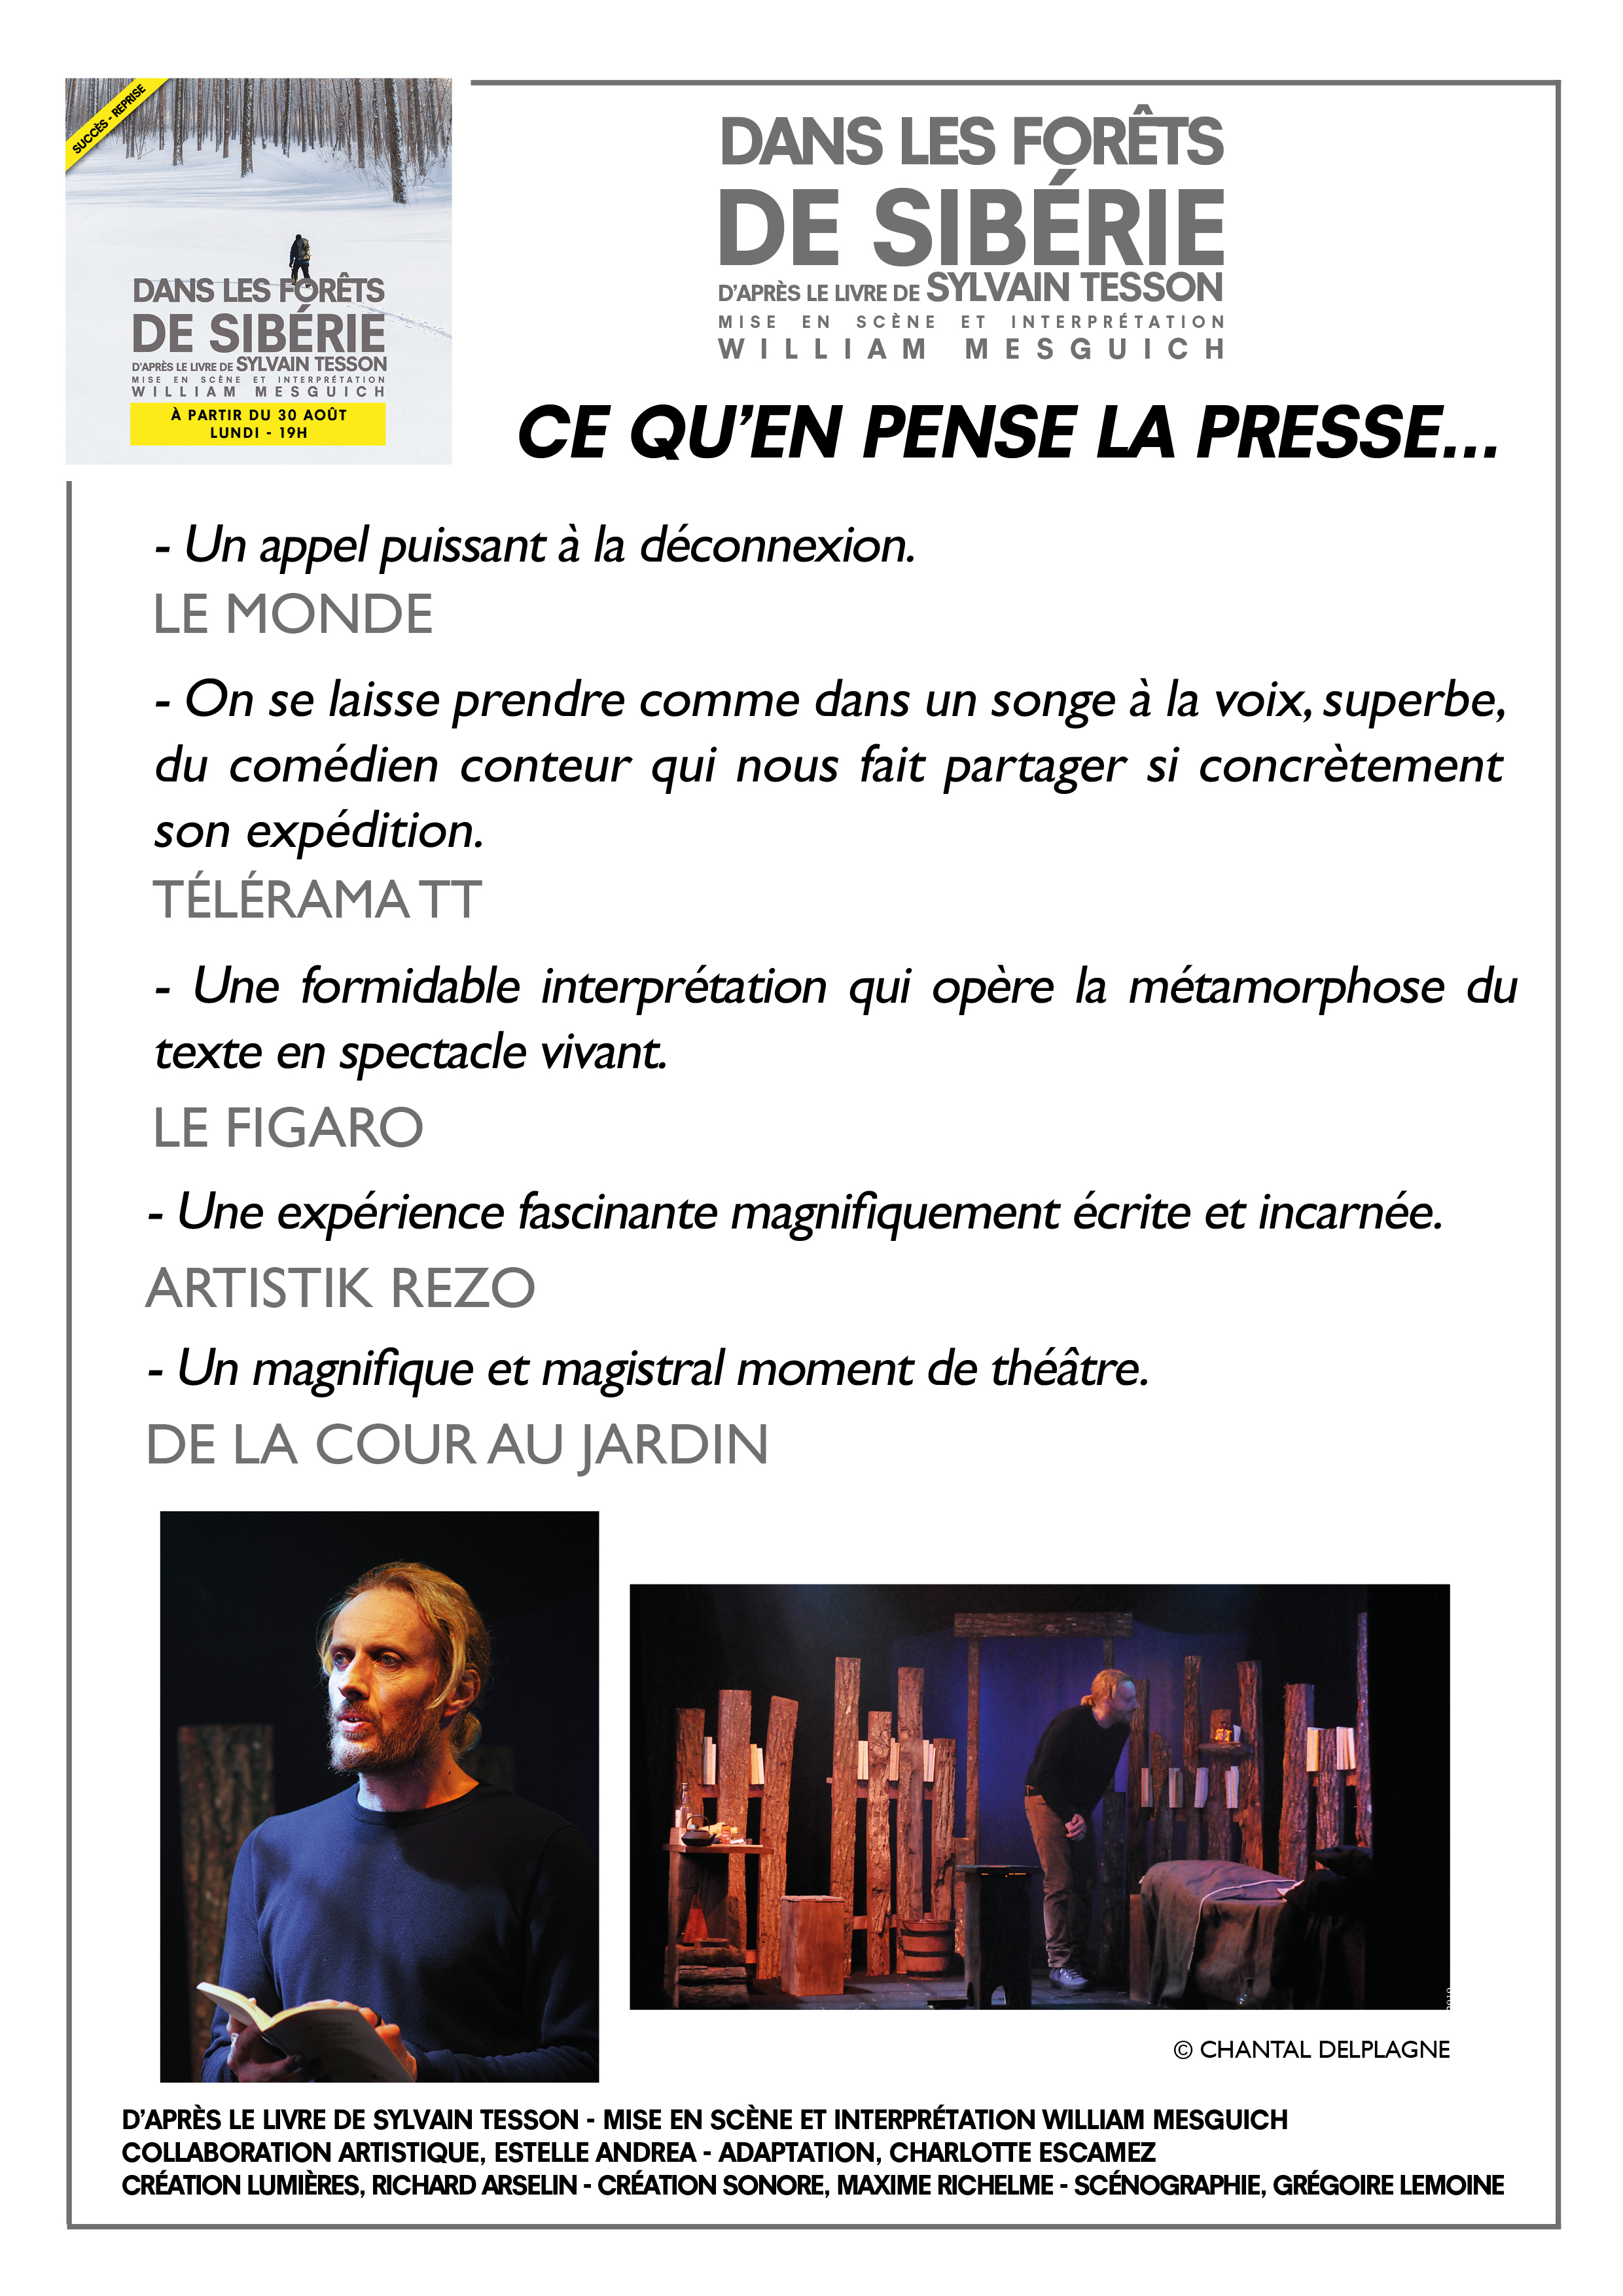 https://www.theatredepoche-montparnasse.com/wp-content/uploads/2021/06/VISUEL-PHRASES-PRESSE-SIBERIE-2.jpg